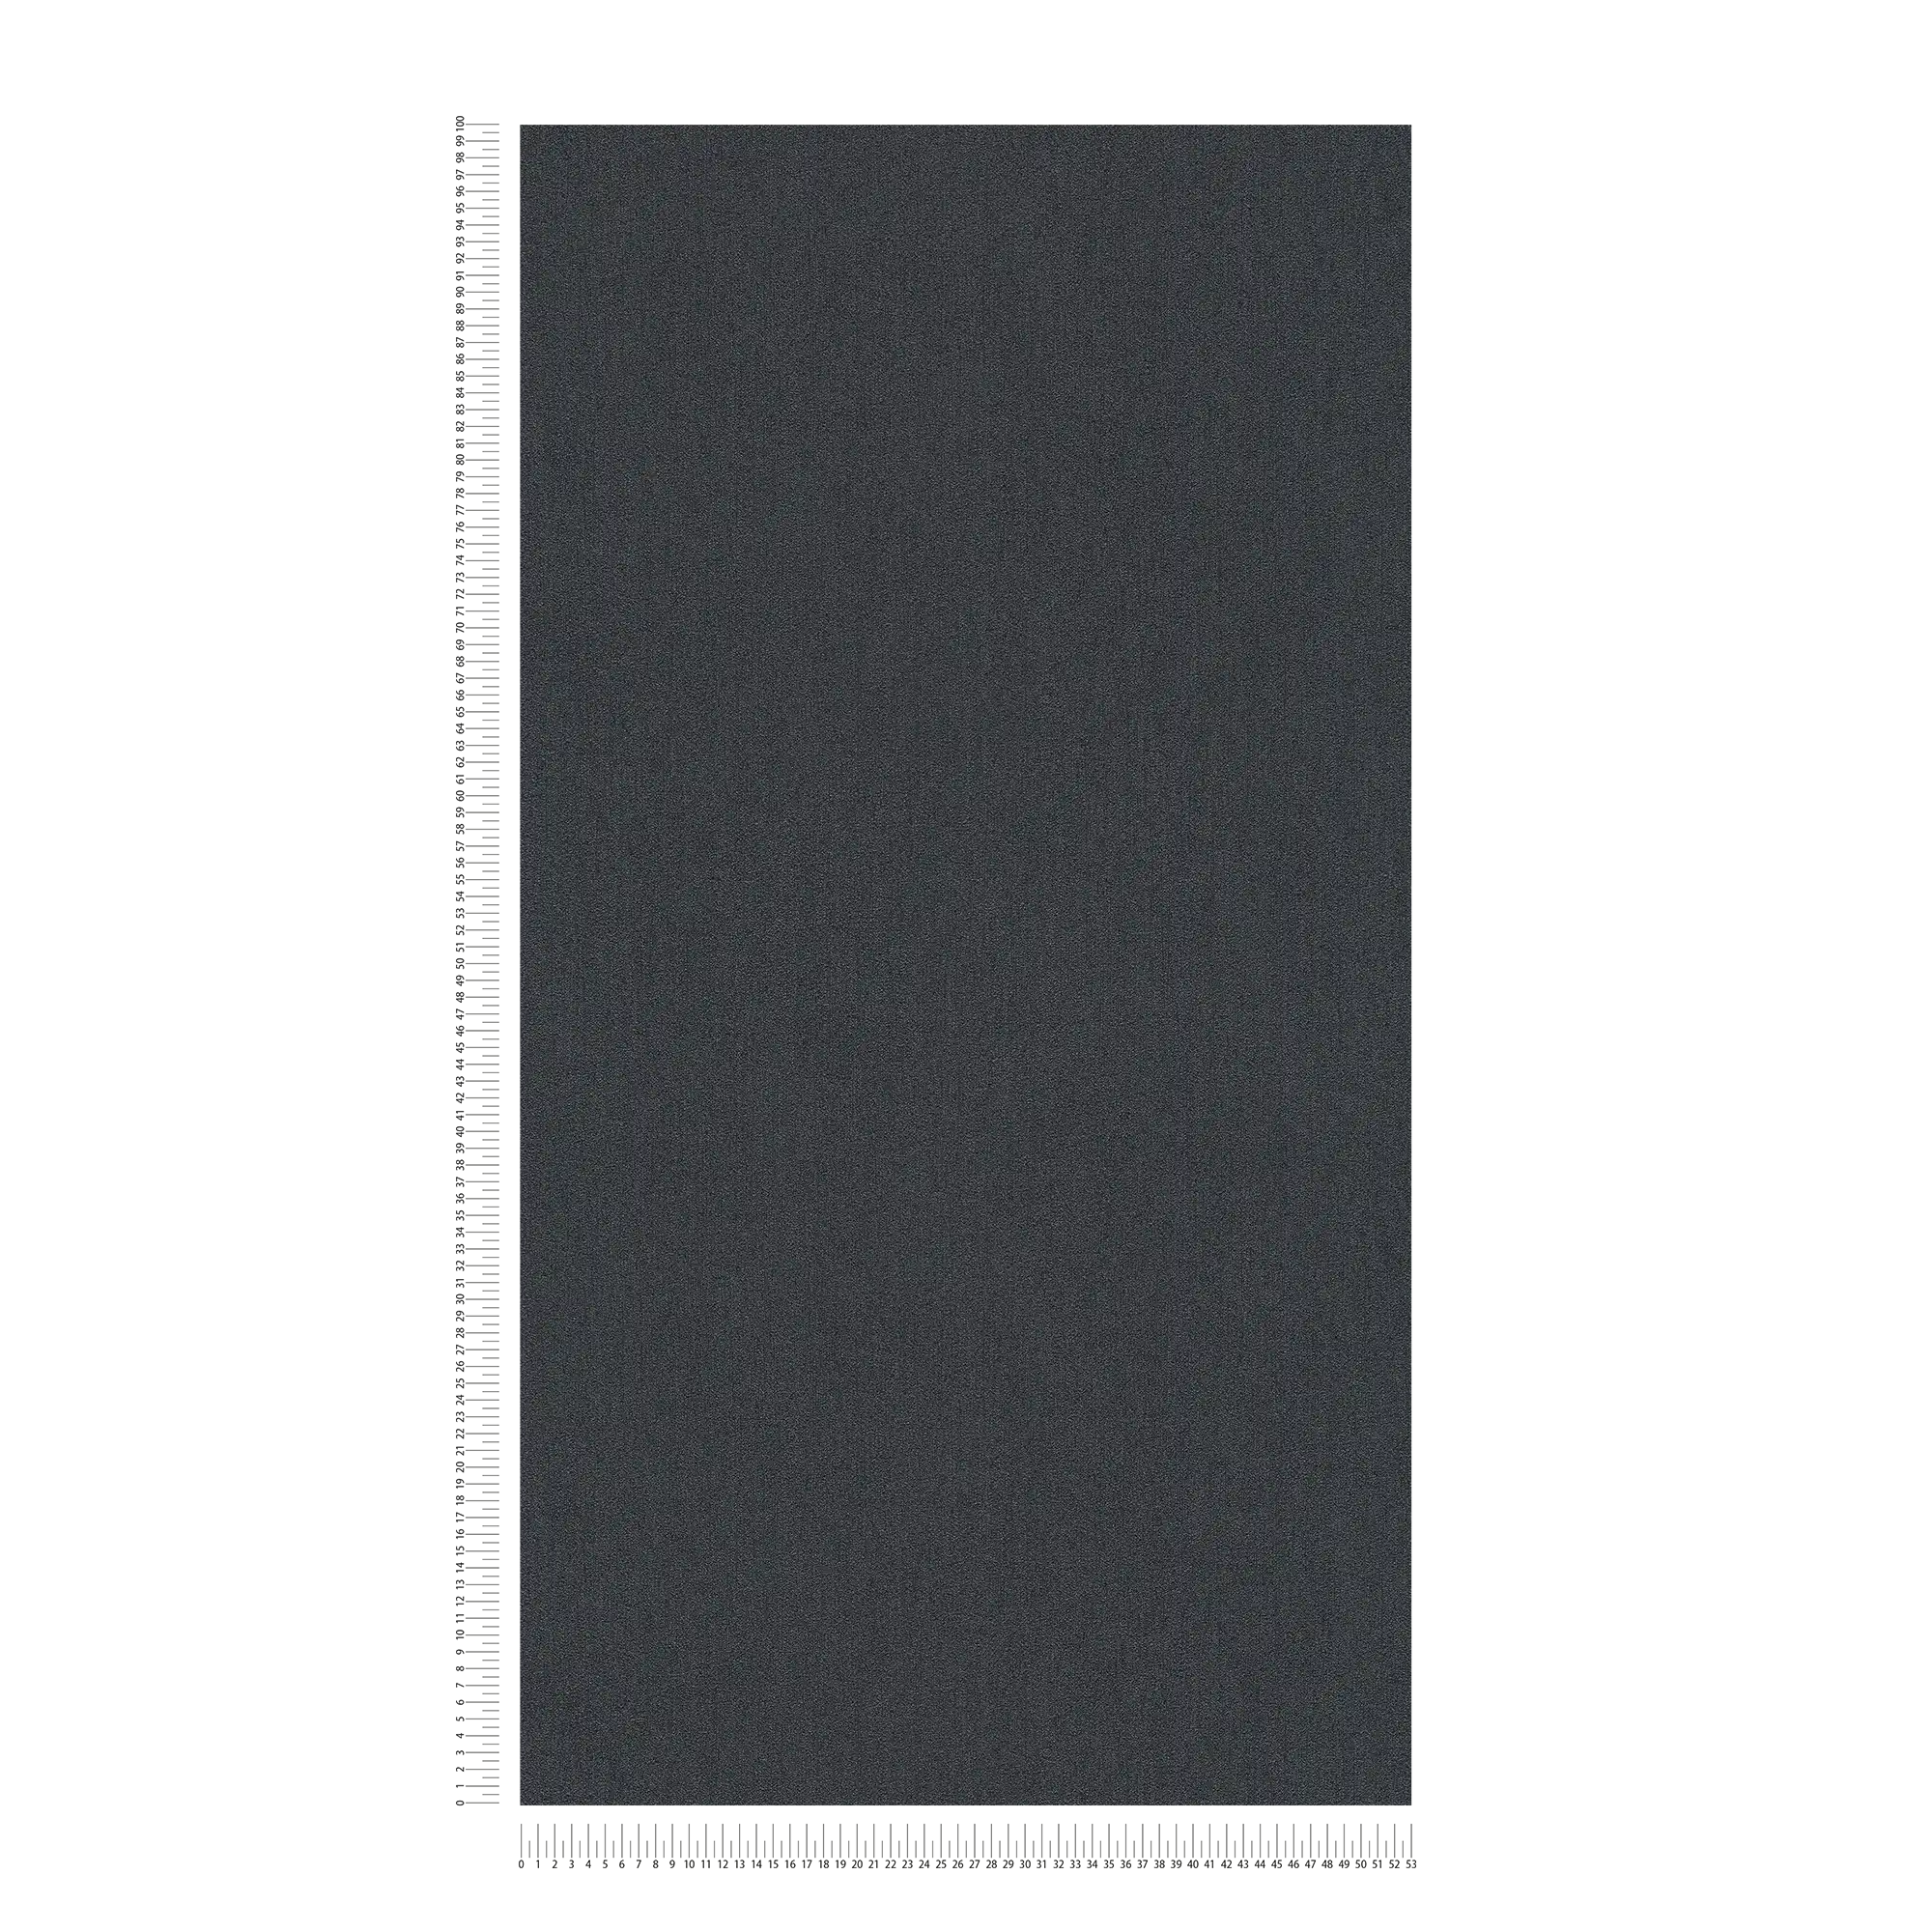             Karl LAGERFELD non-woven wallpaper plain & texture - black
        